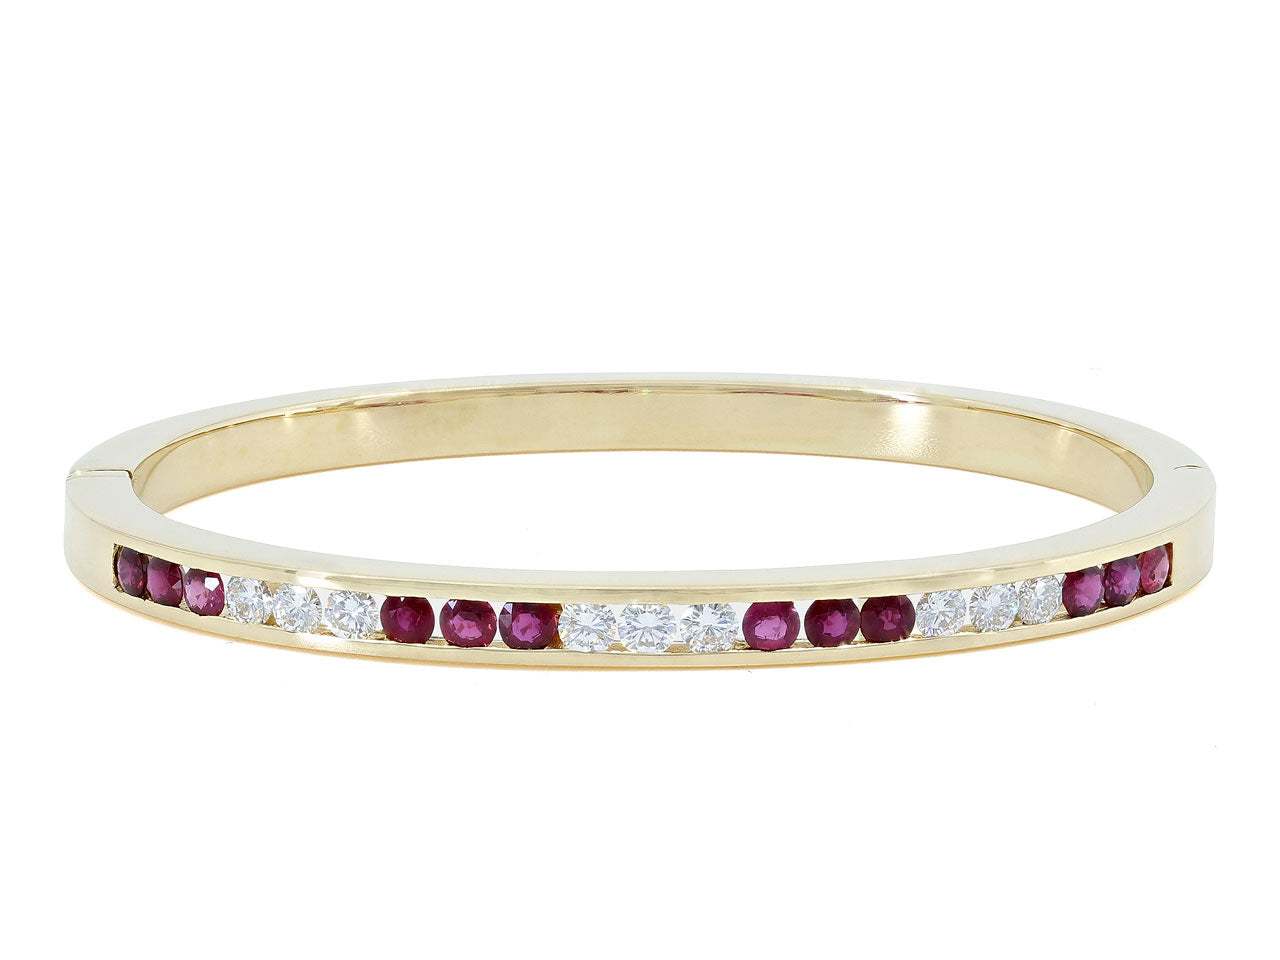 Ruby and Diamond Bangle Bracelet in 18K Gold